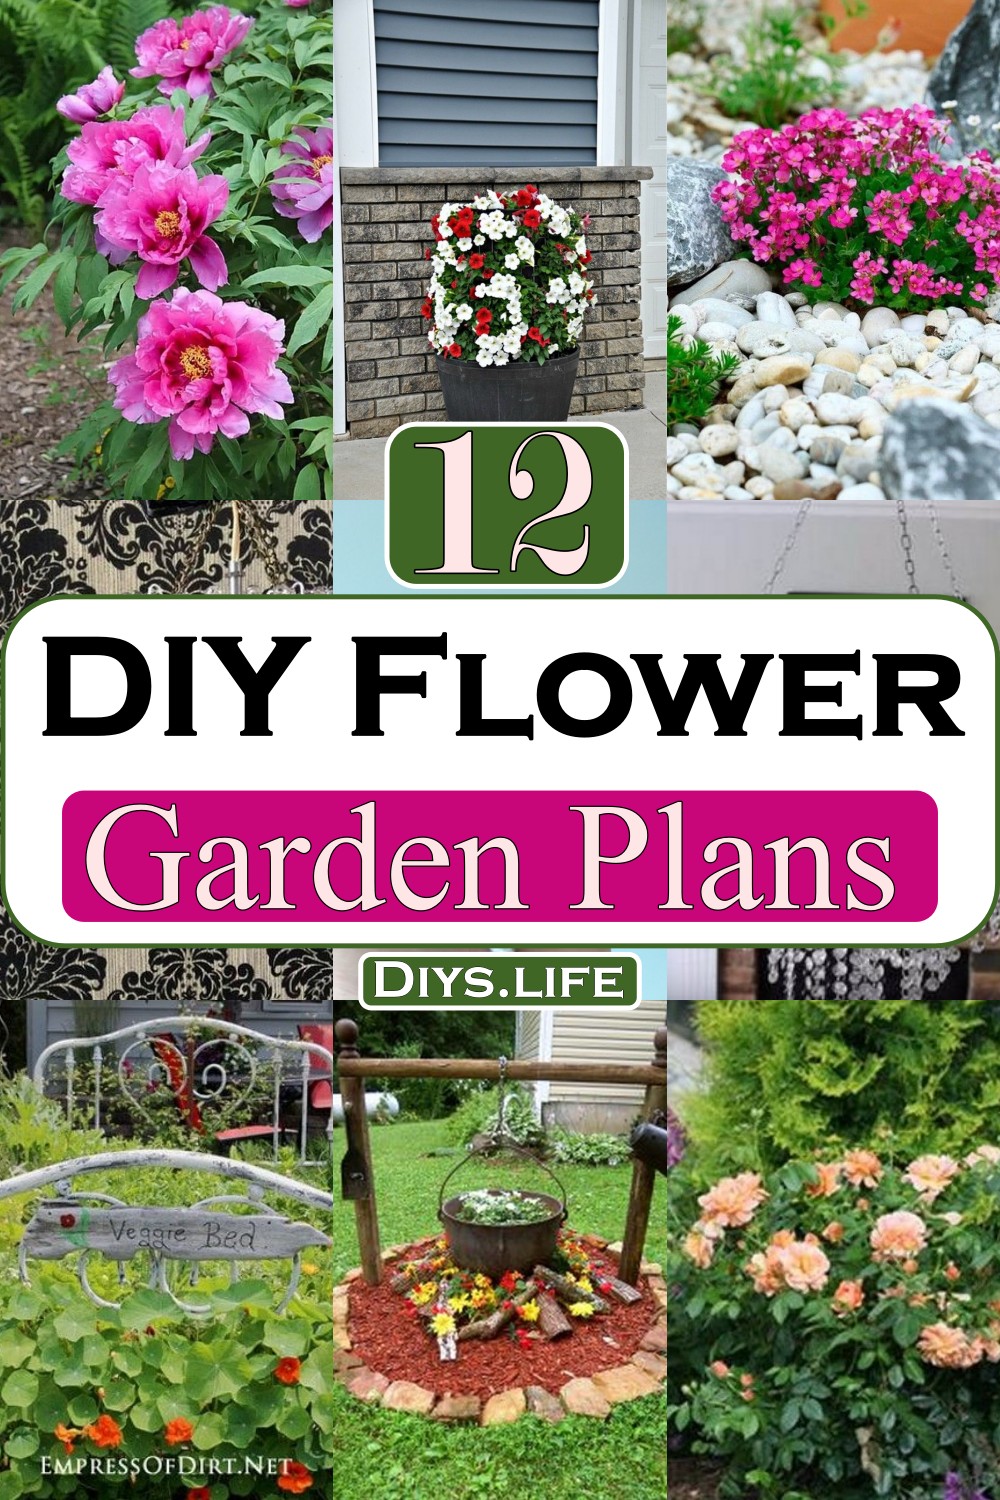 DIY Flower Garden Plans